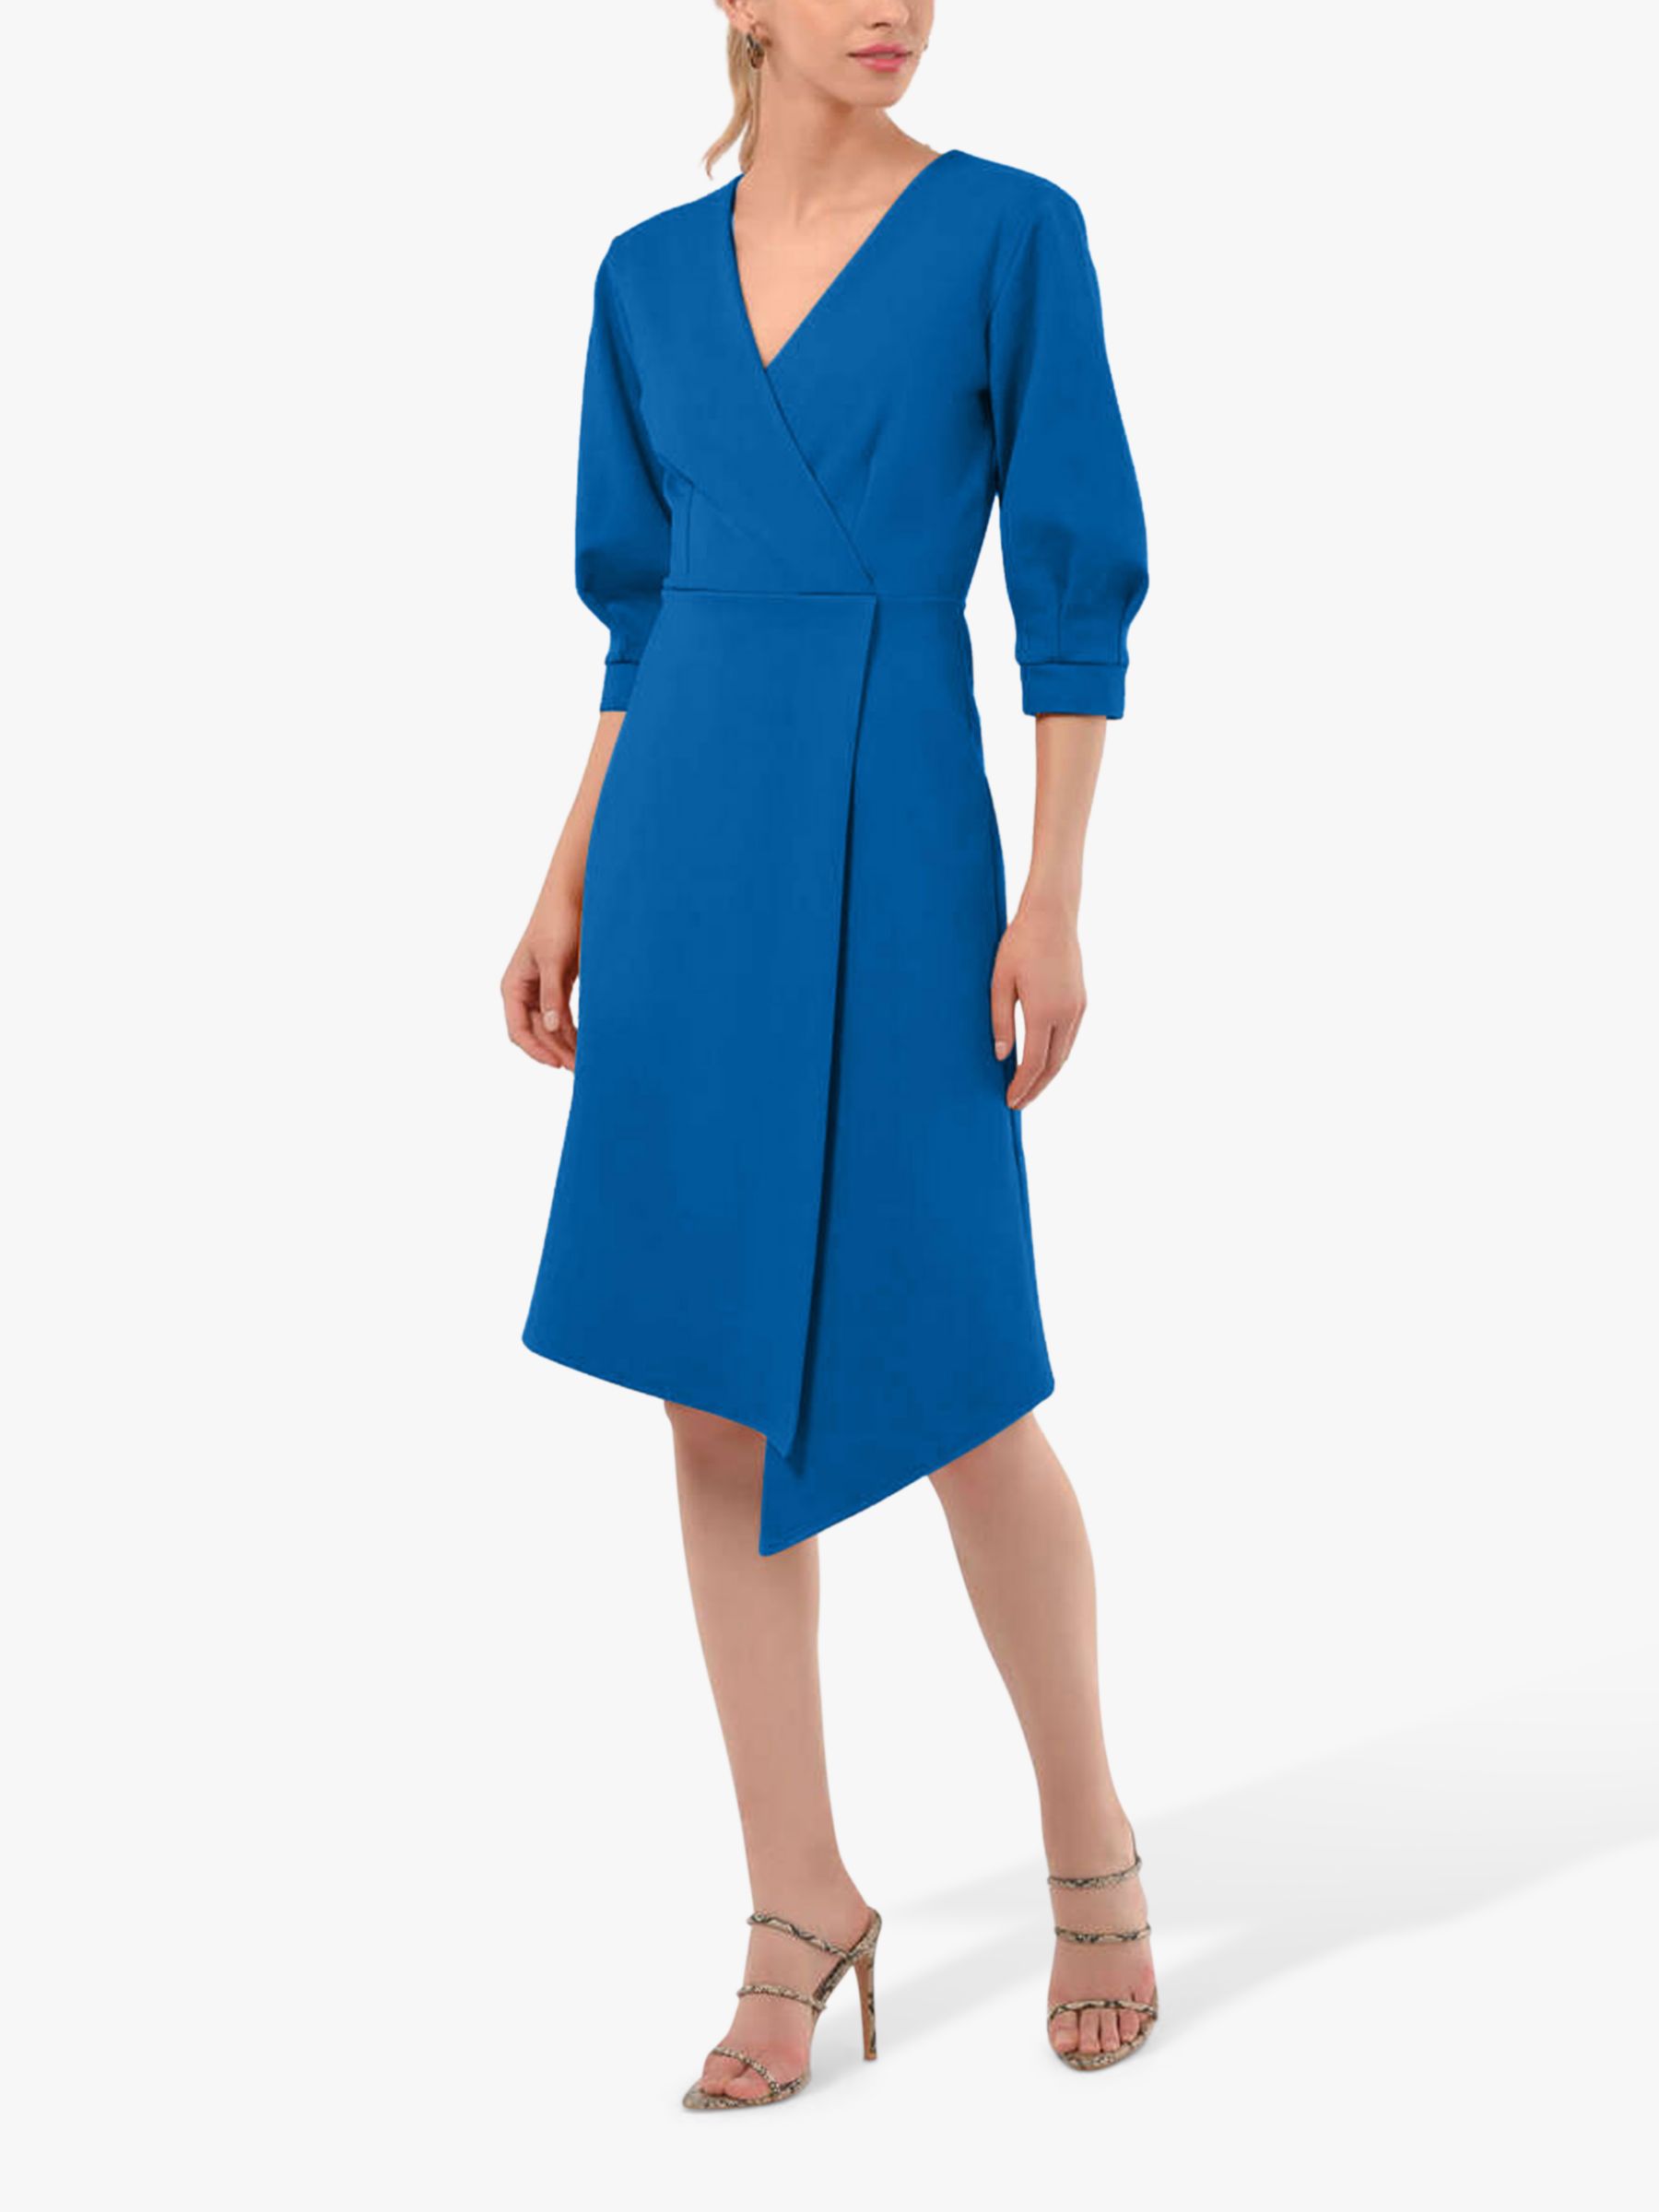 Closet London Pleated Sleeve Wrap Dress, Blue at John Lewis & Partners